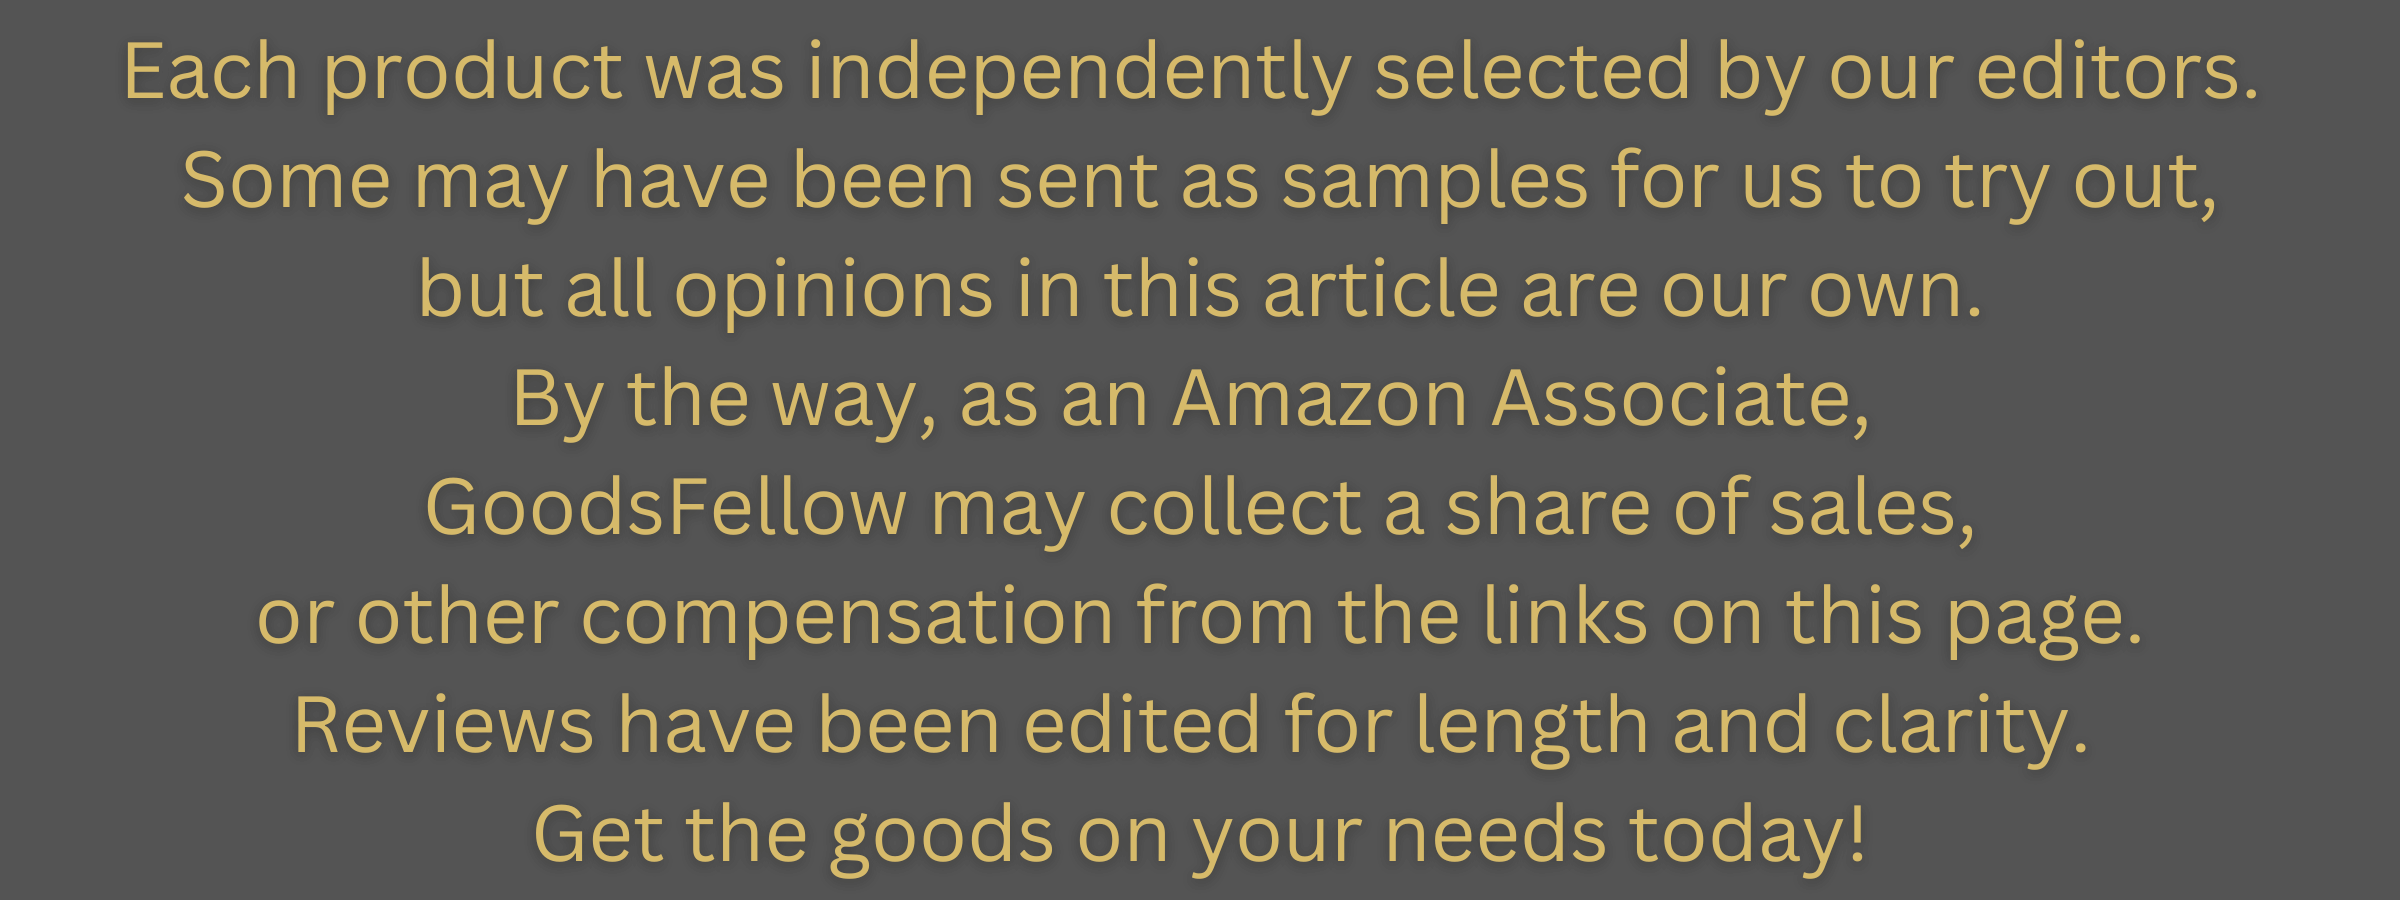 Amazon Associates Paid Links Disclosure